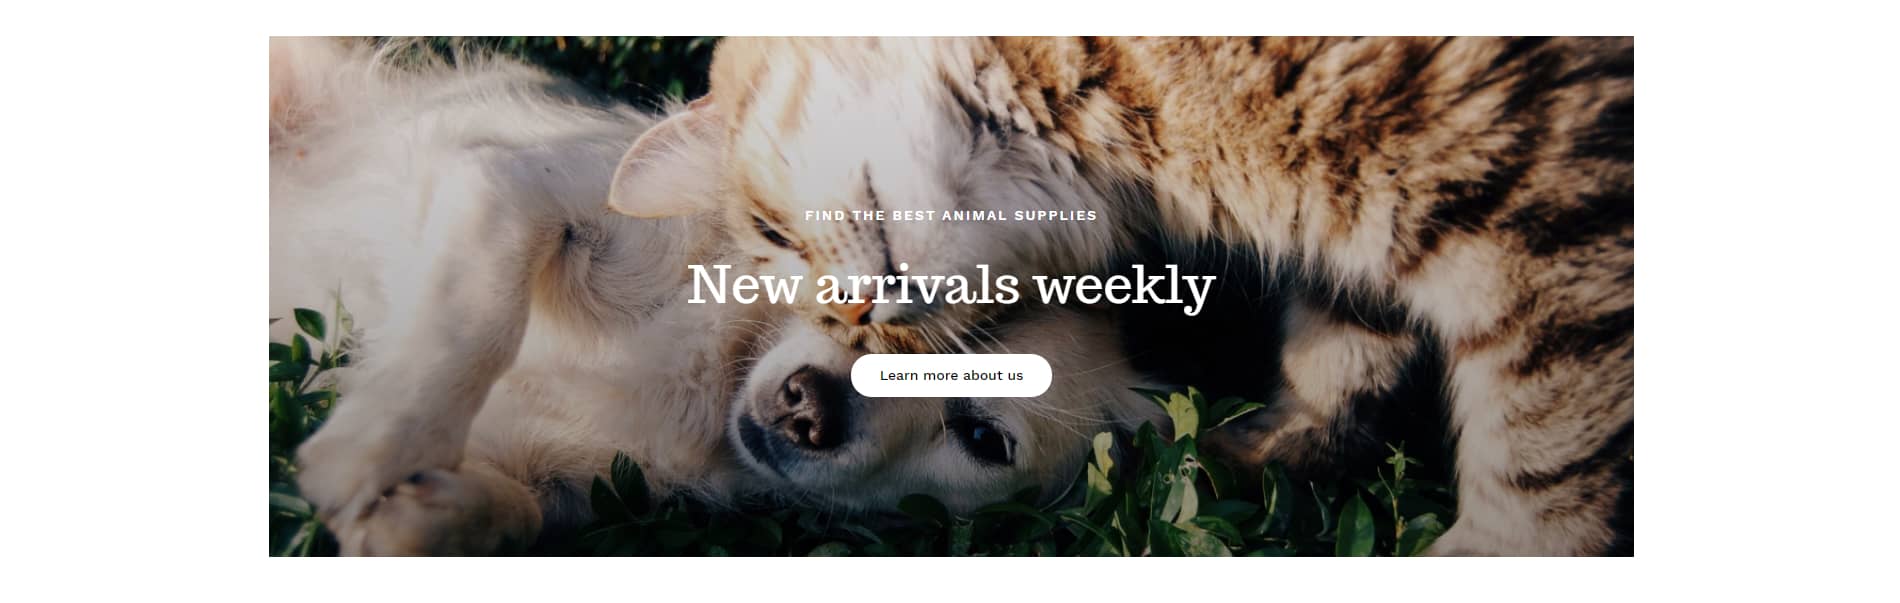 Avada Pet Supplies Visual CTA - New Arrivals Weekly